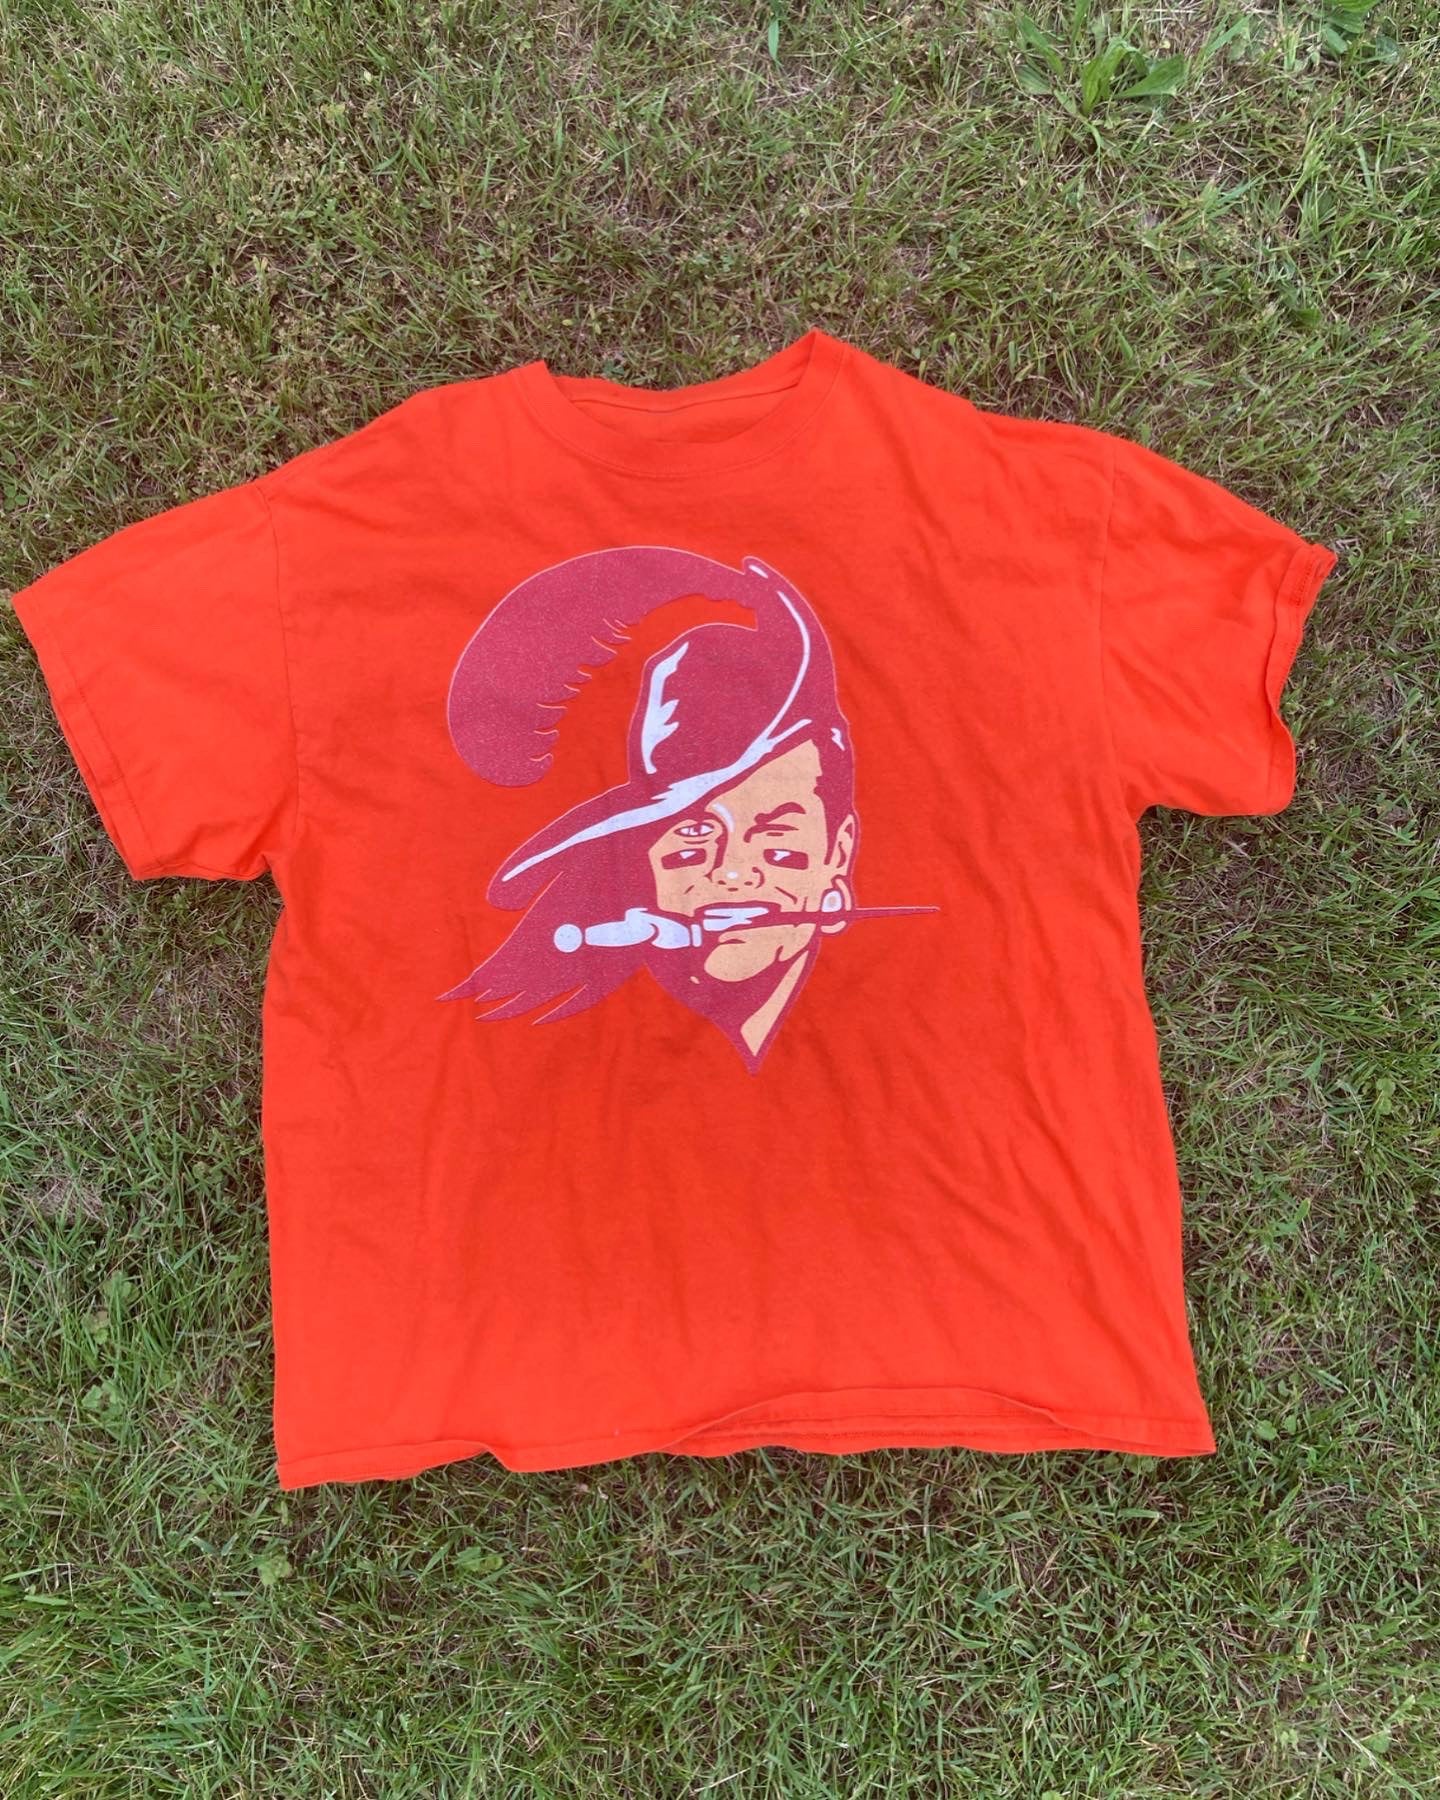 Tampa Bay Buccaneers Alternate Name & Number T-Shirt - Tom